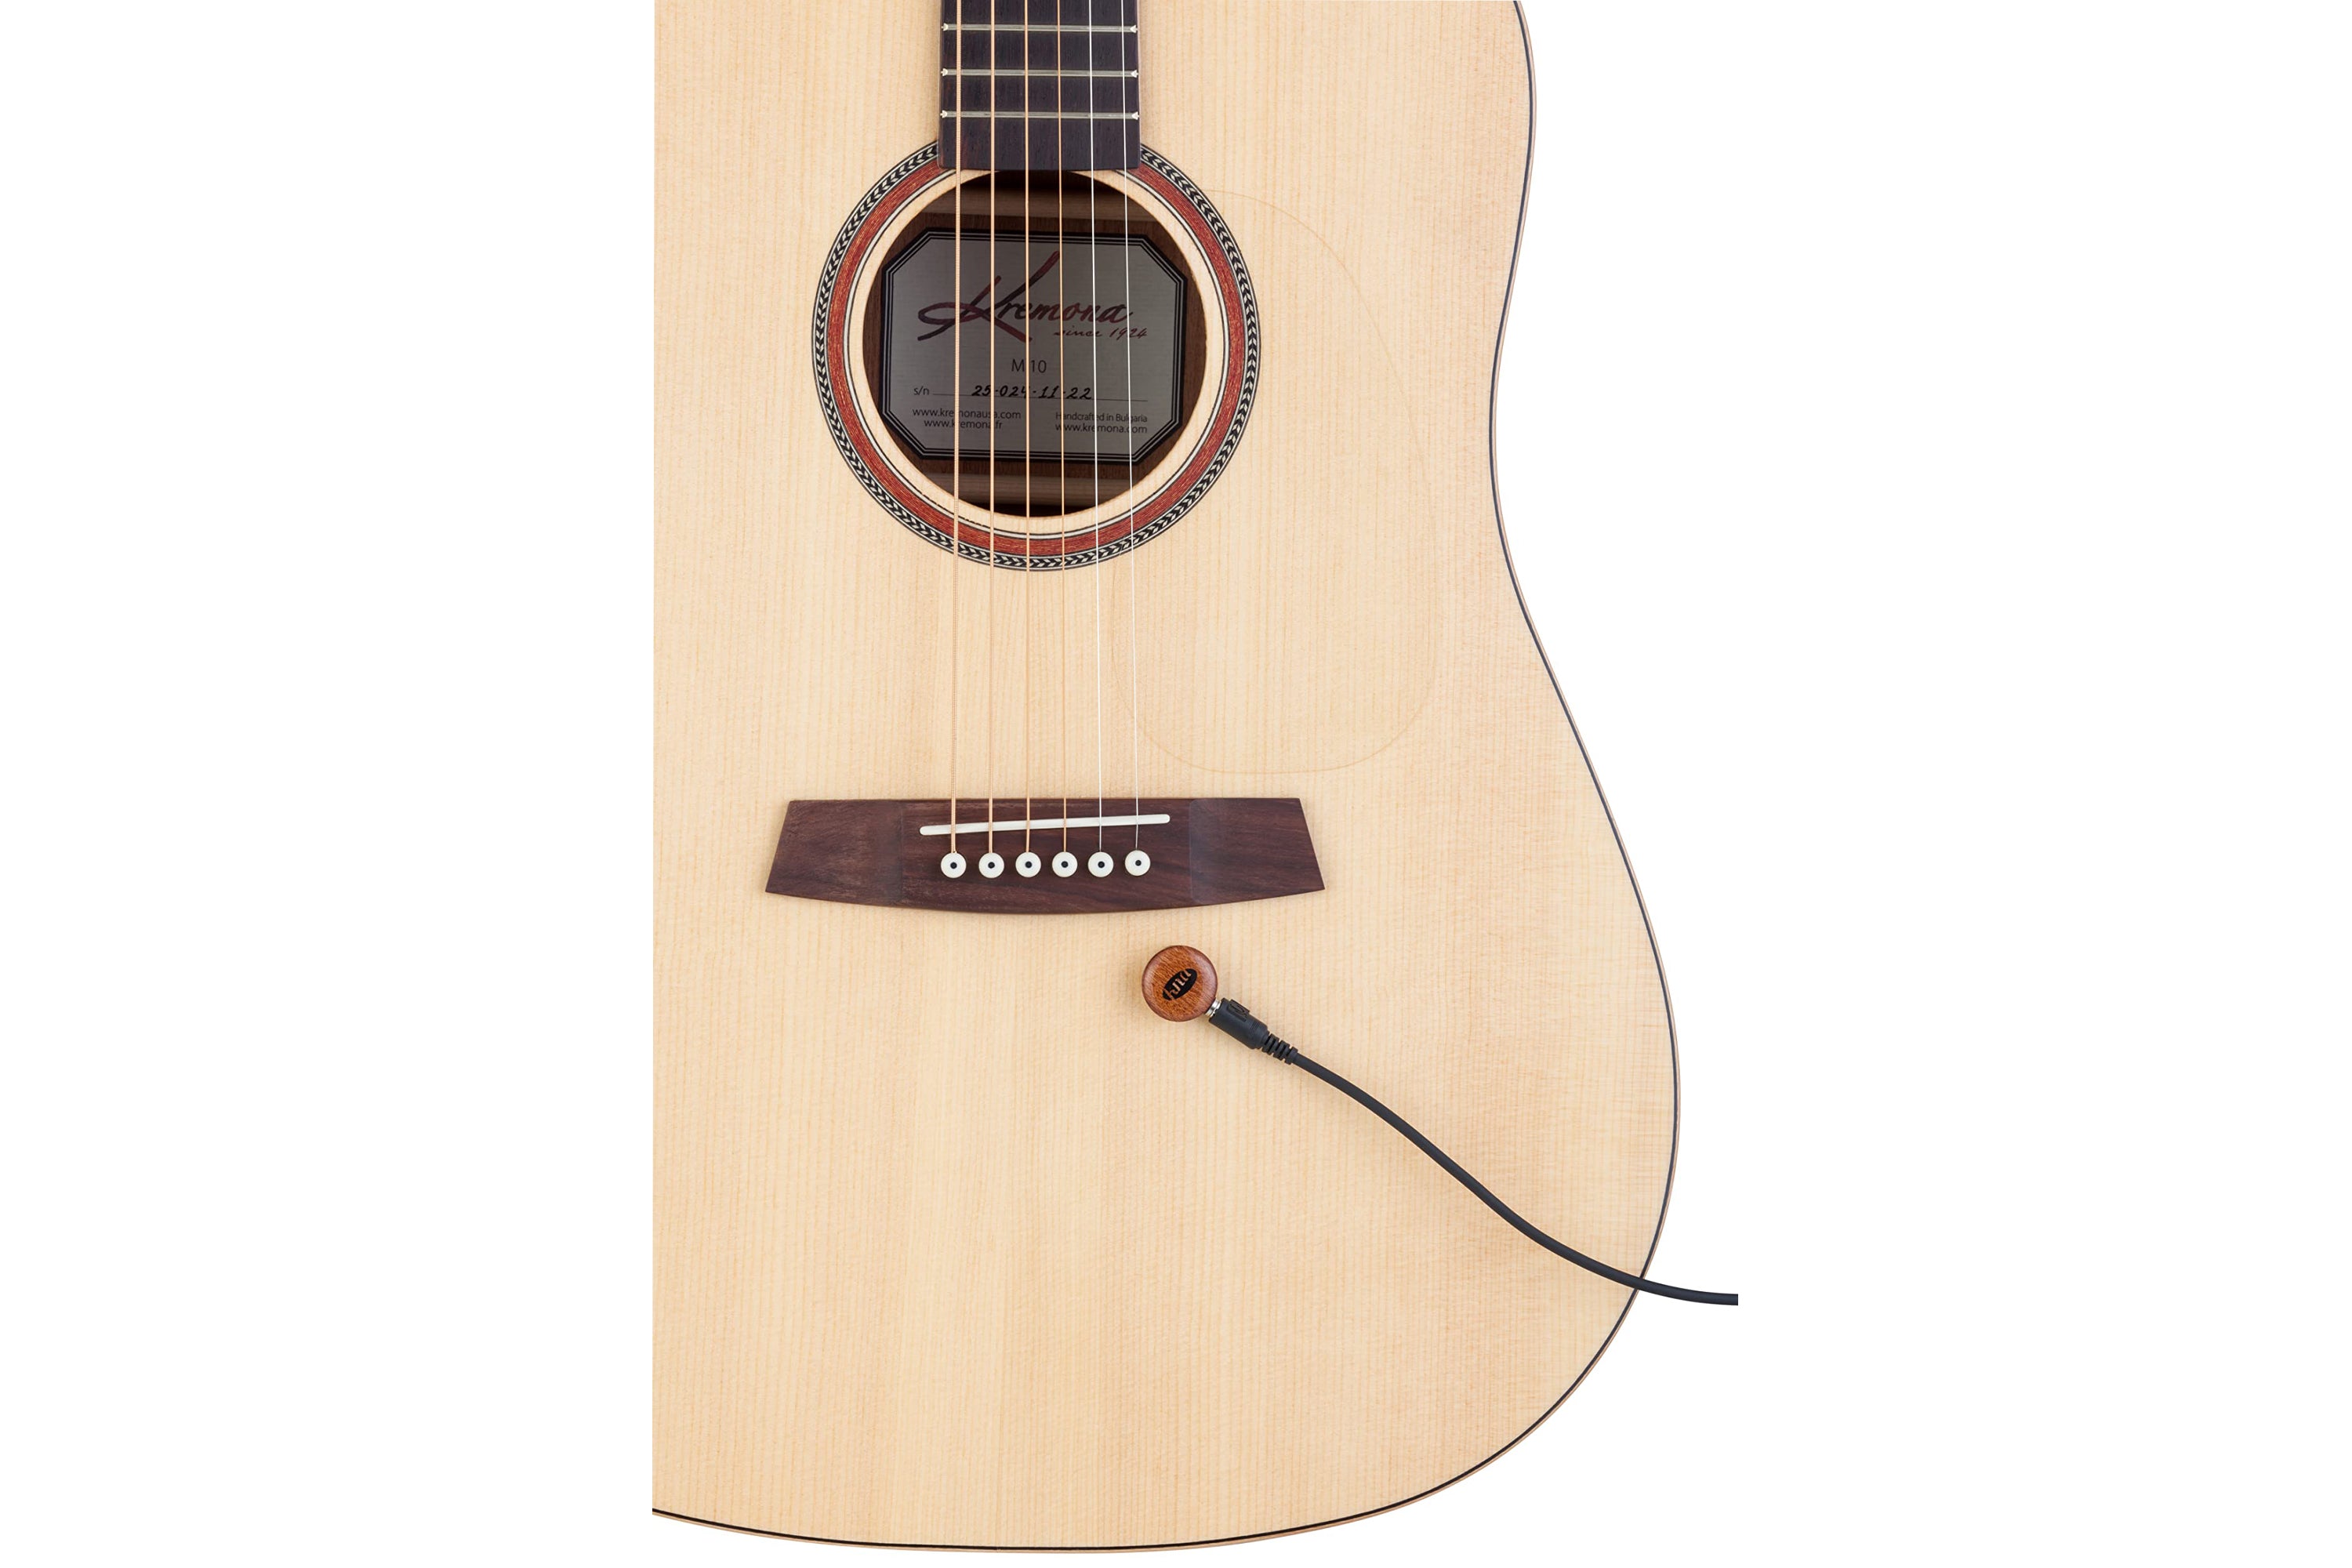 KNA UP-1 Acoustic Guitar Pickup